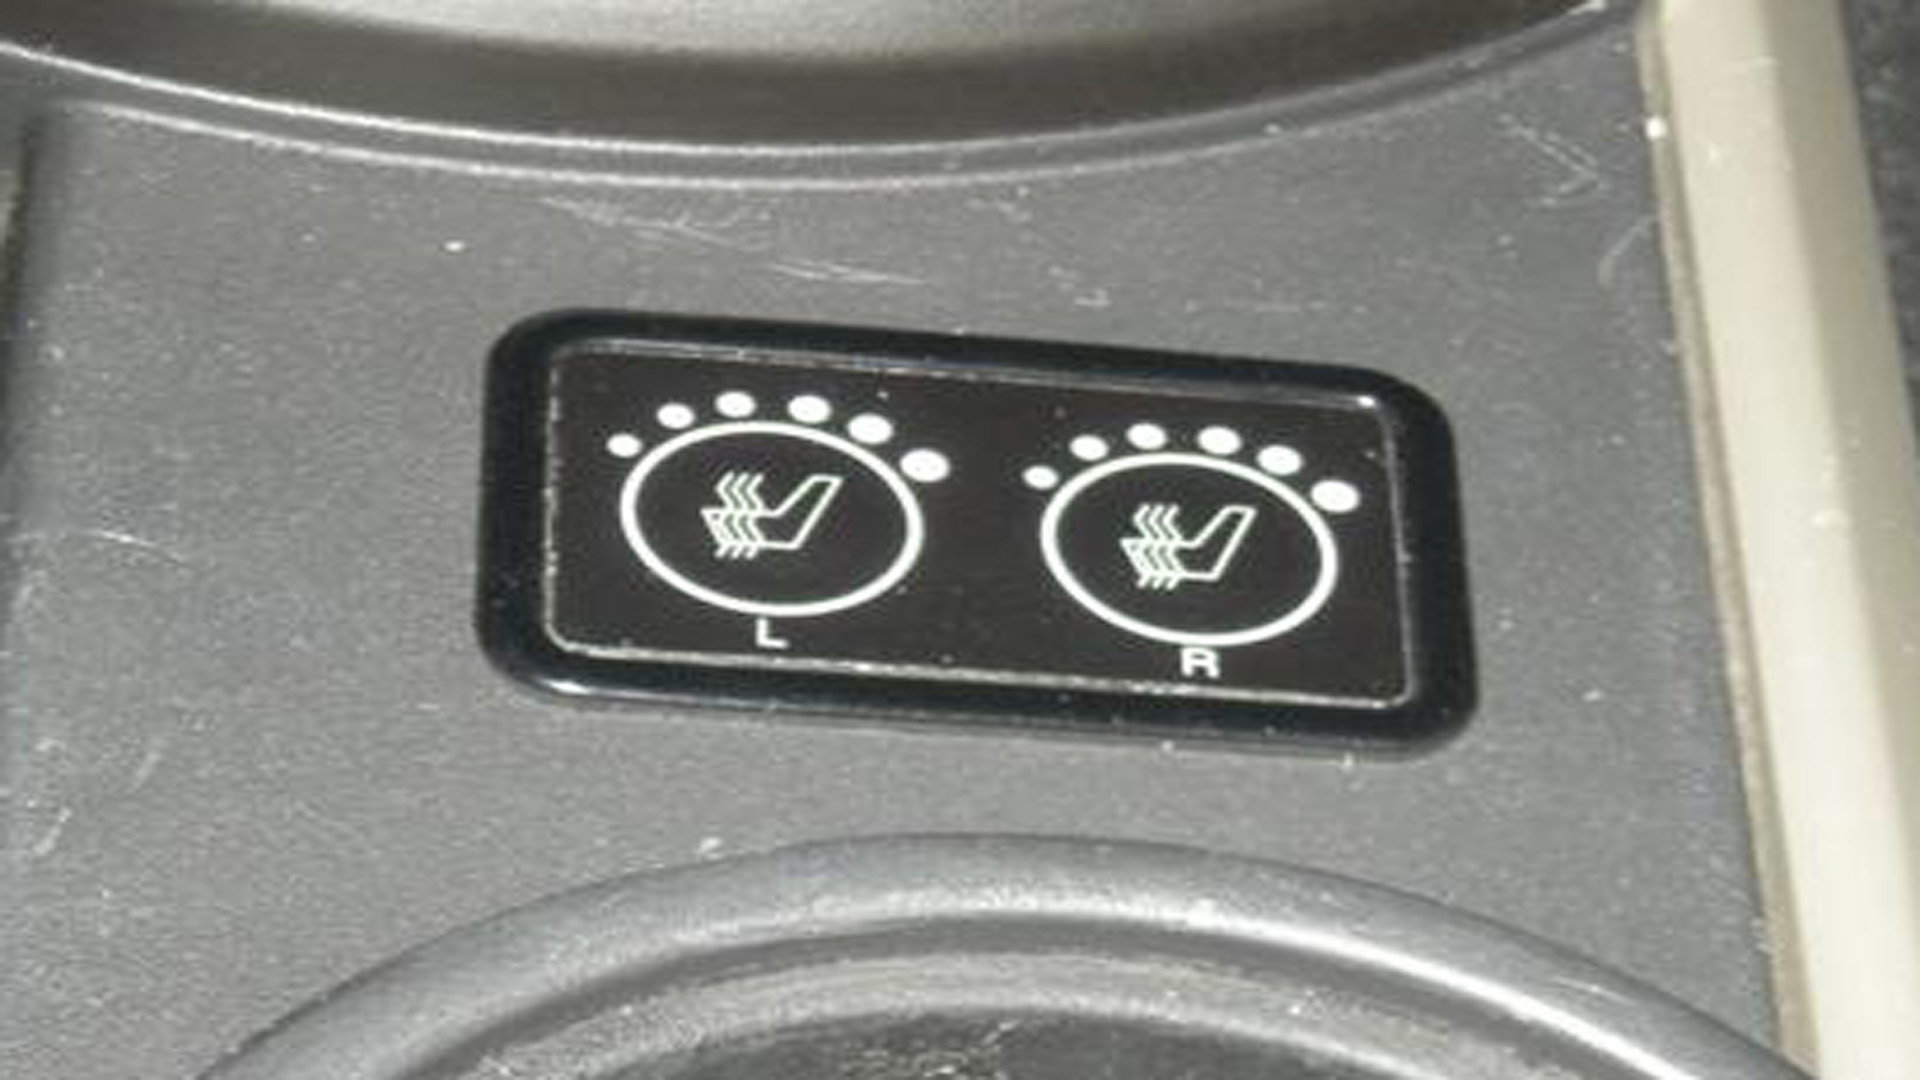 Jeep Wrangler JK: How to Install Heated Seats | Jk-forum